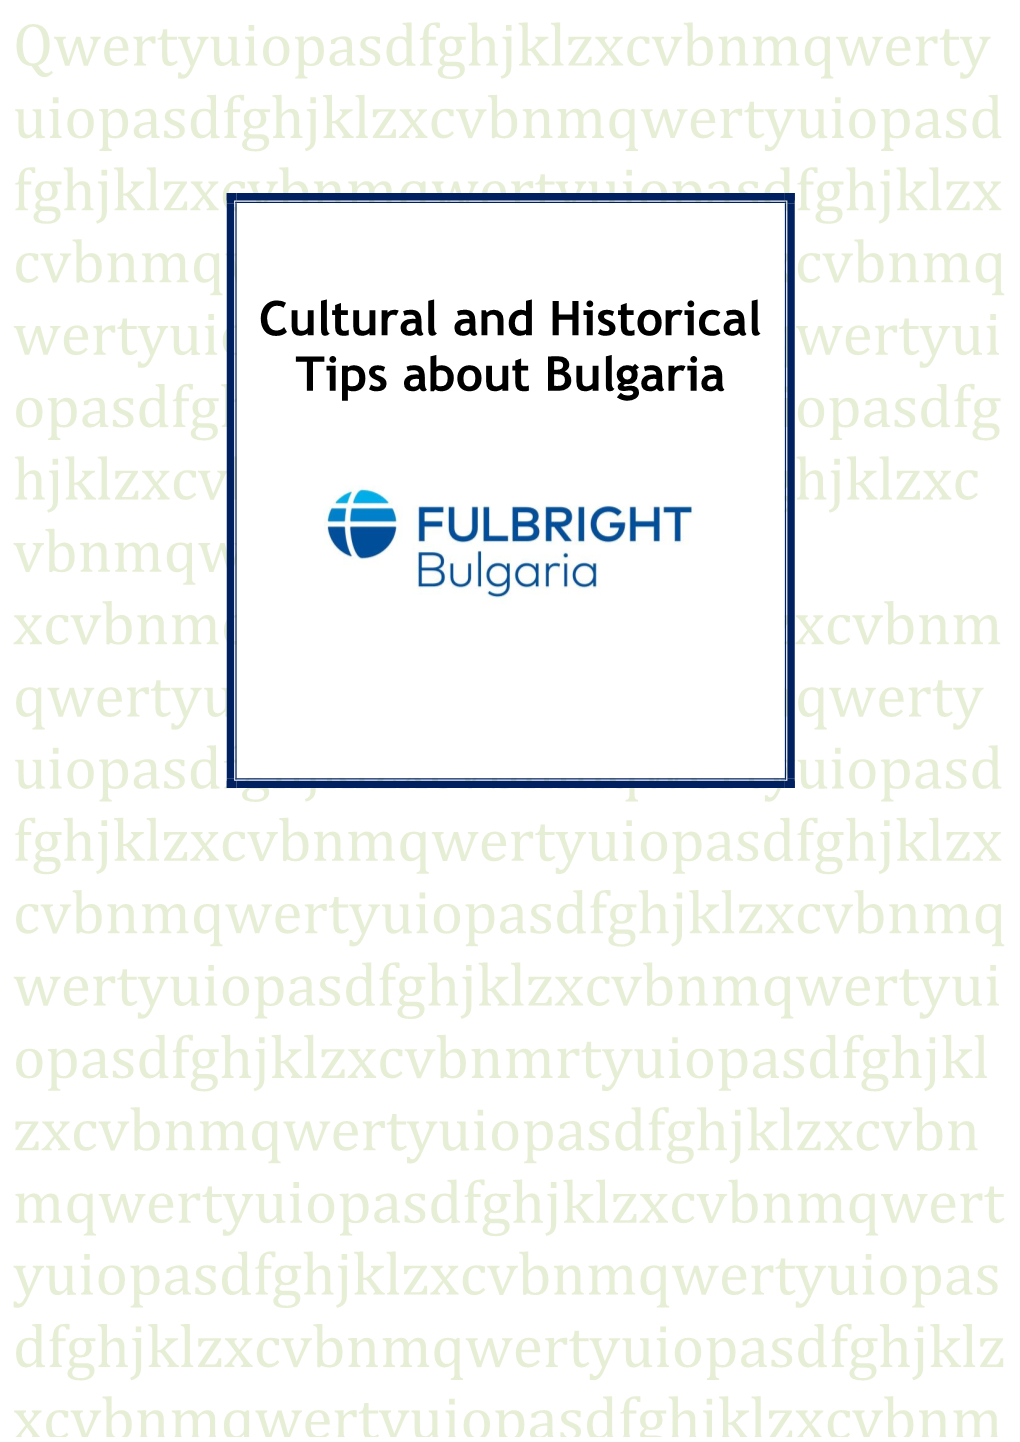 Cultural and Historical Tips About Bulgaria Opasdfghjklzxcvbnmqwertyuiopasdfg Hjklzxcvbnmqwertyuiopasdfghjklzxc Vbnmqwertyuiopasdfghjklz